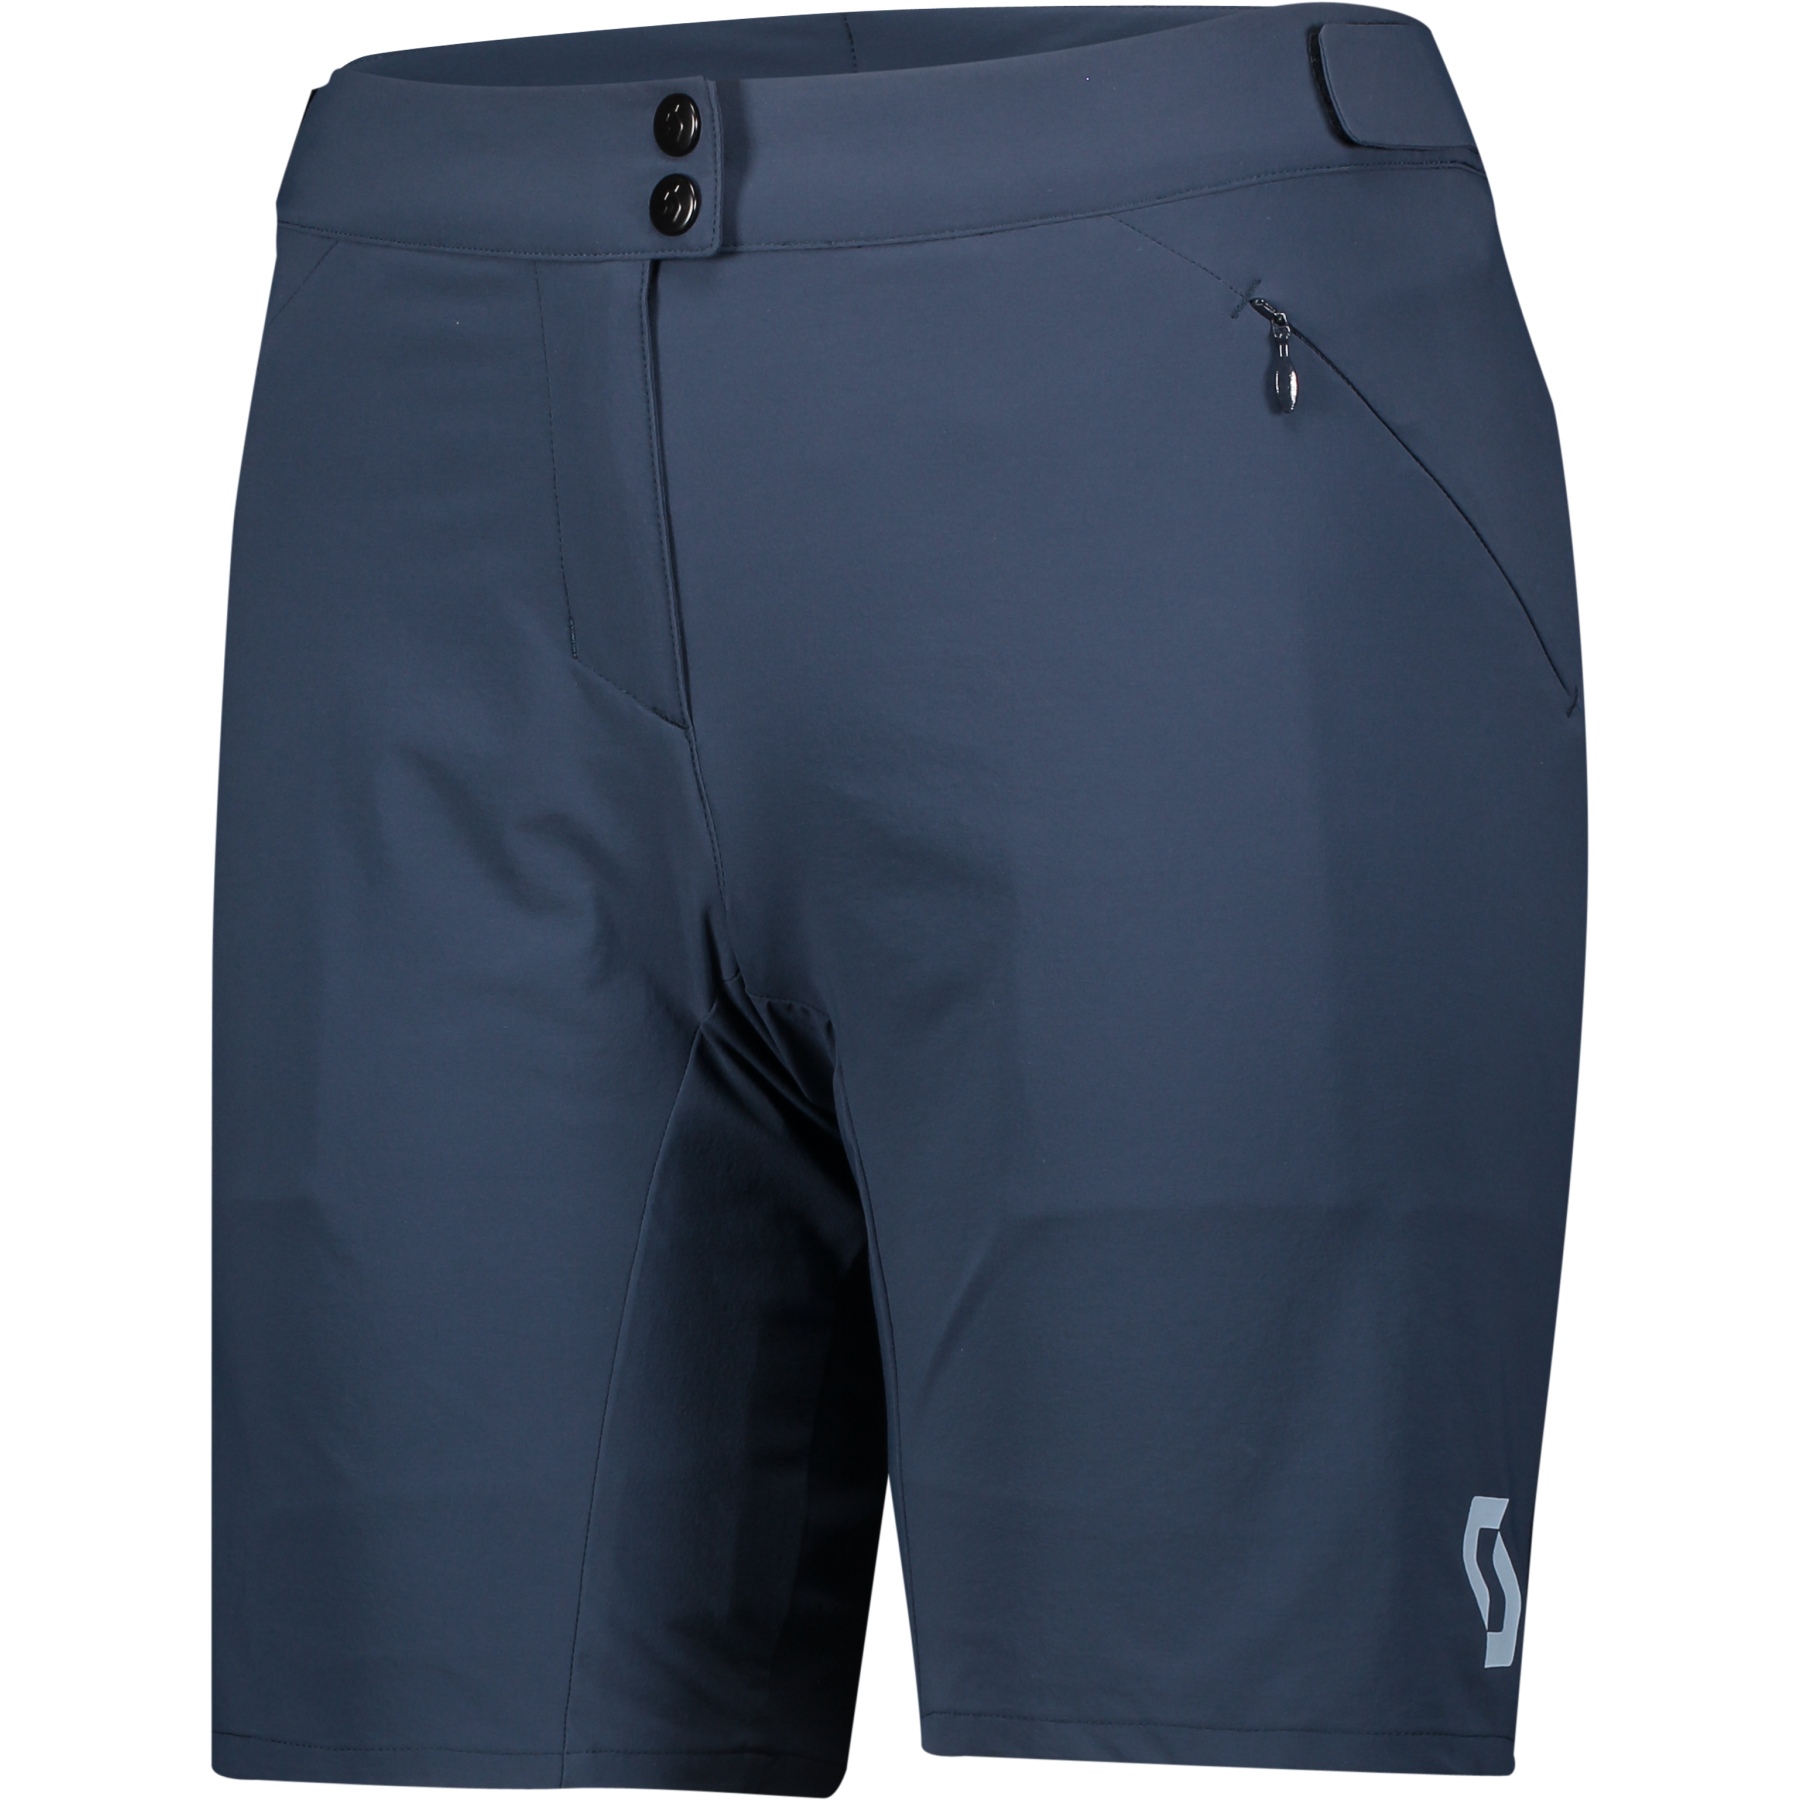 Image of SCOTT Endurance LS/Fit w/ Pad Women's Shorts - midnight blue